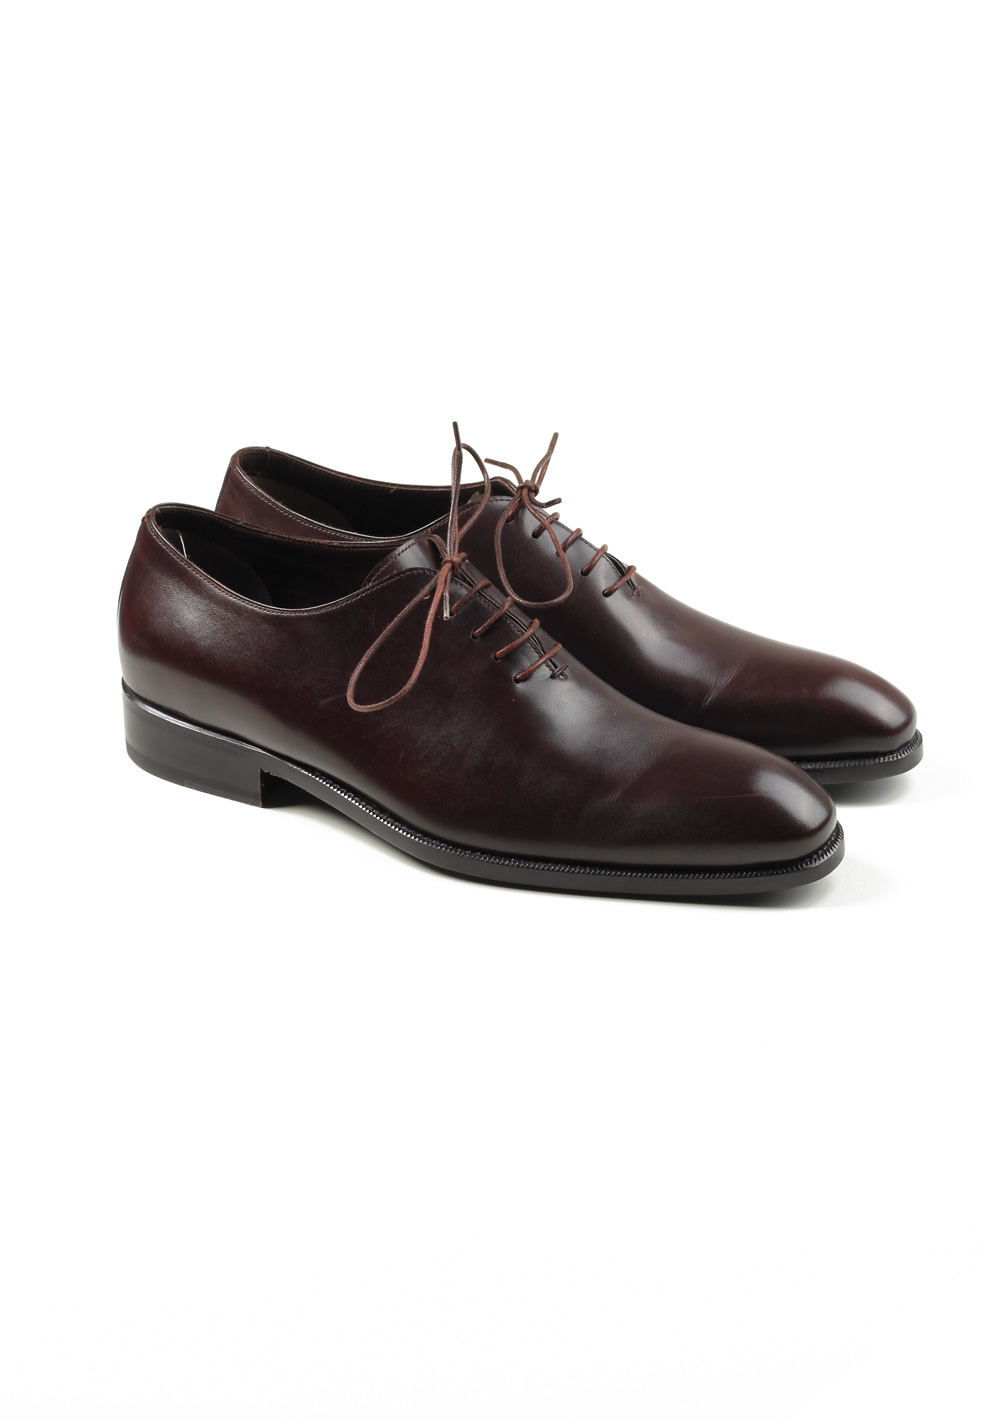 TOM FORD Gianni Whole-cut Oxford Shoes Size 8.5T Uk / 9.5T U.S. | Costume Limité